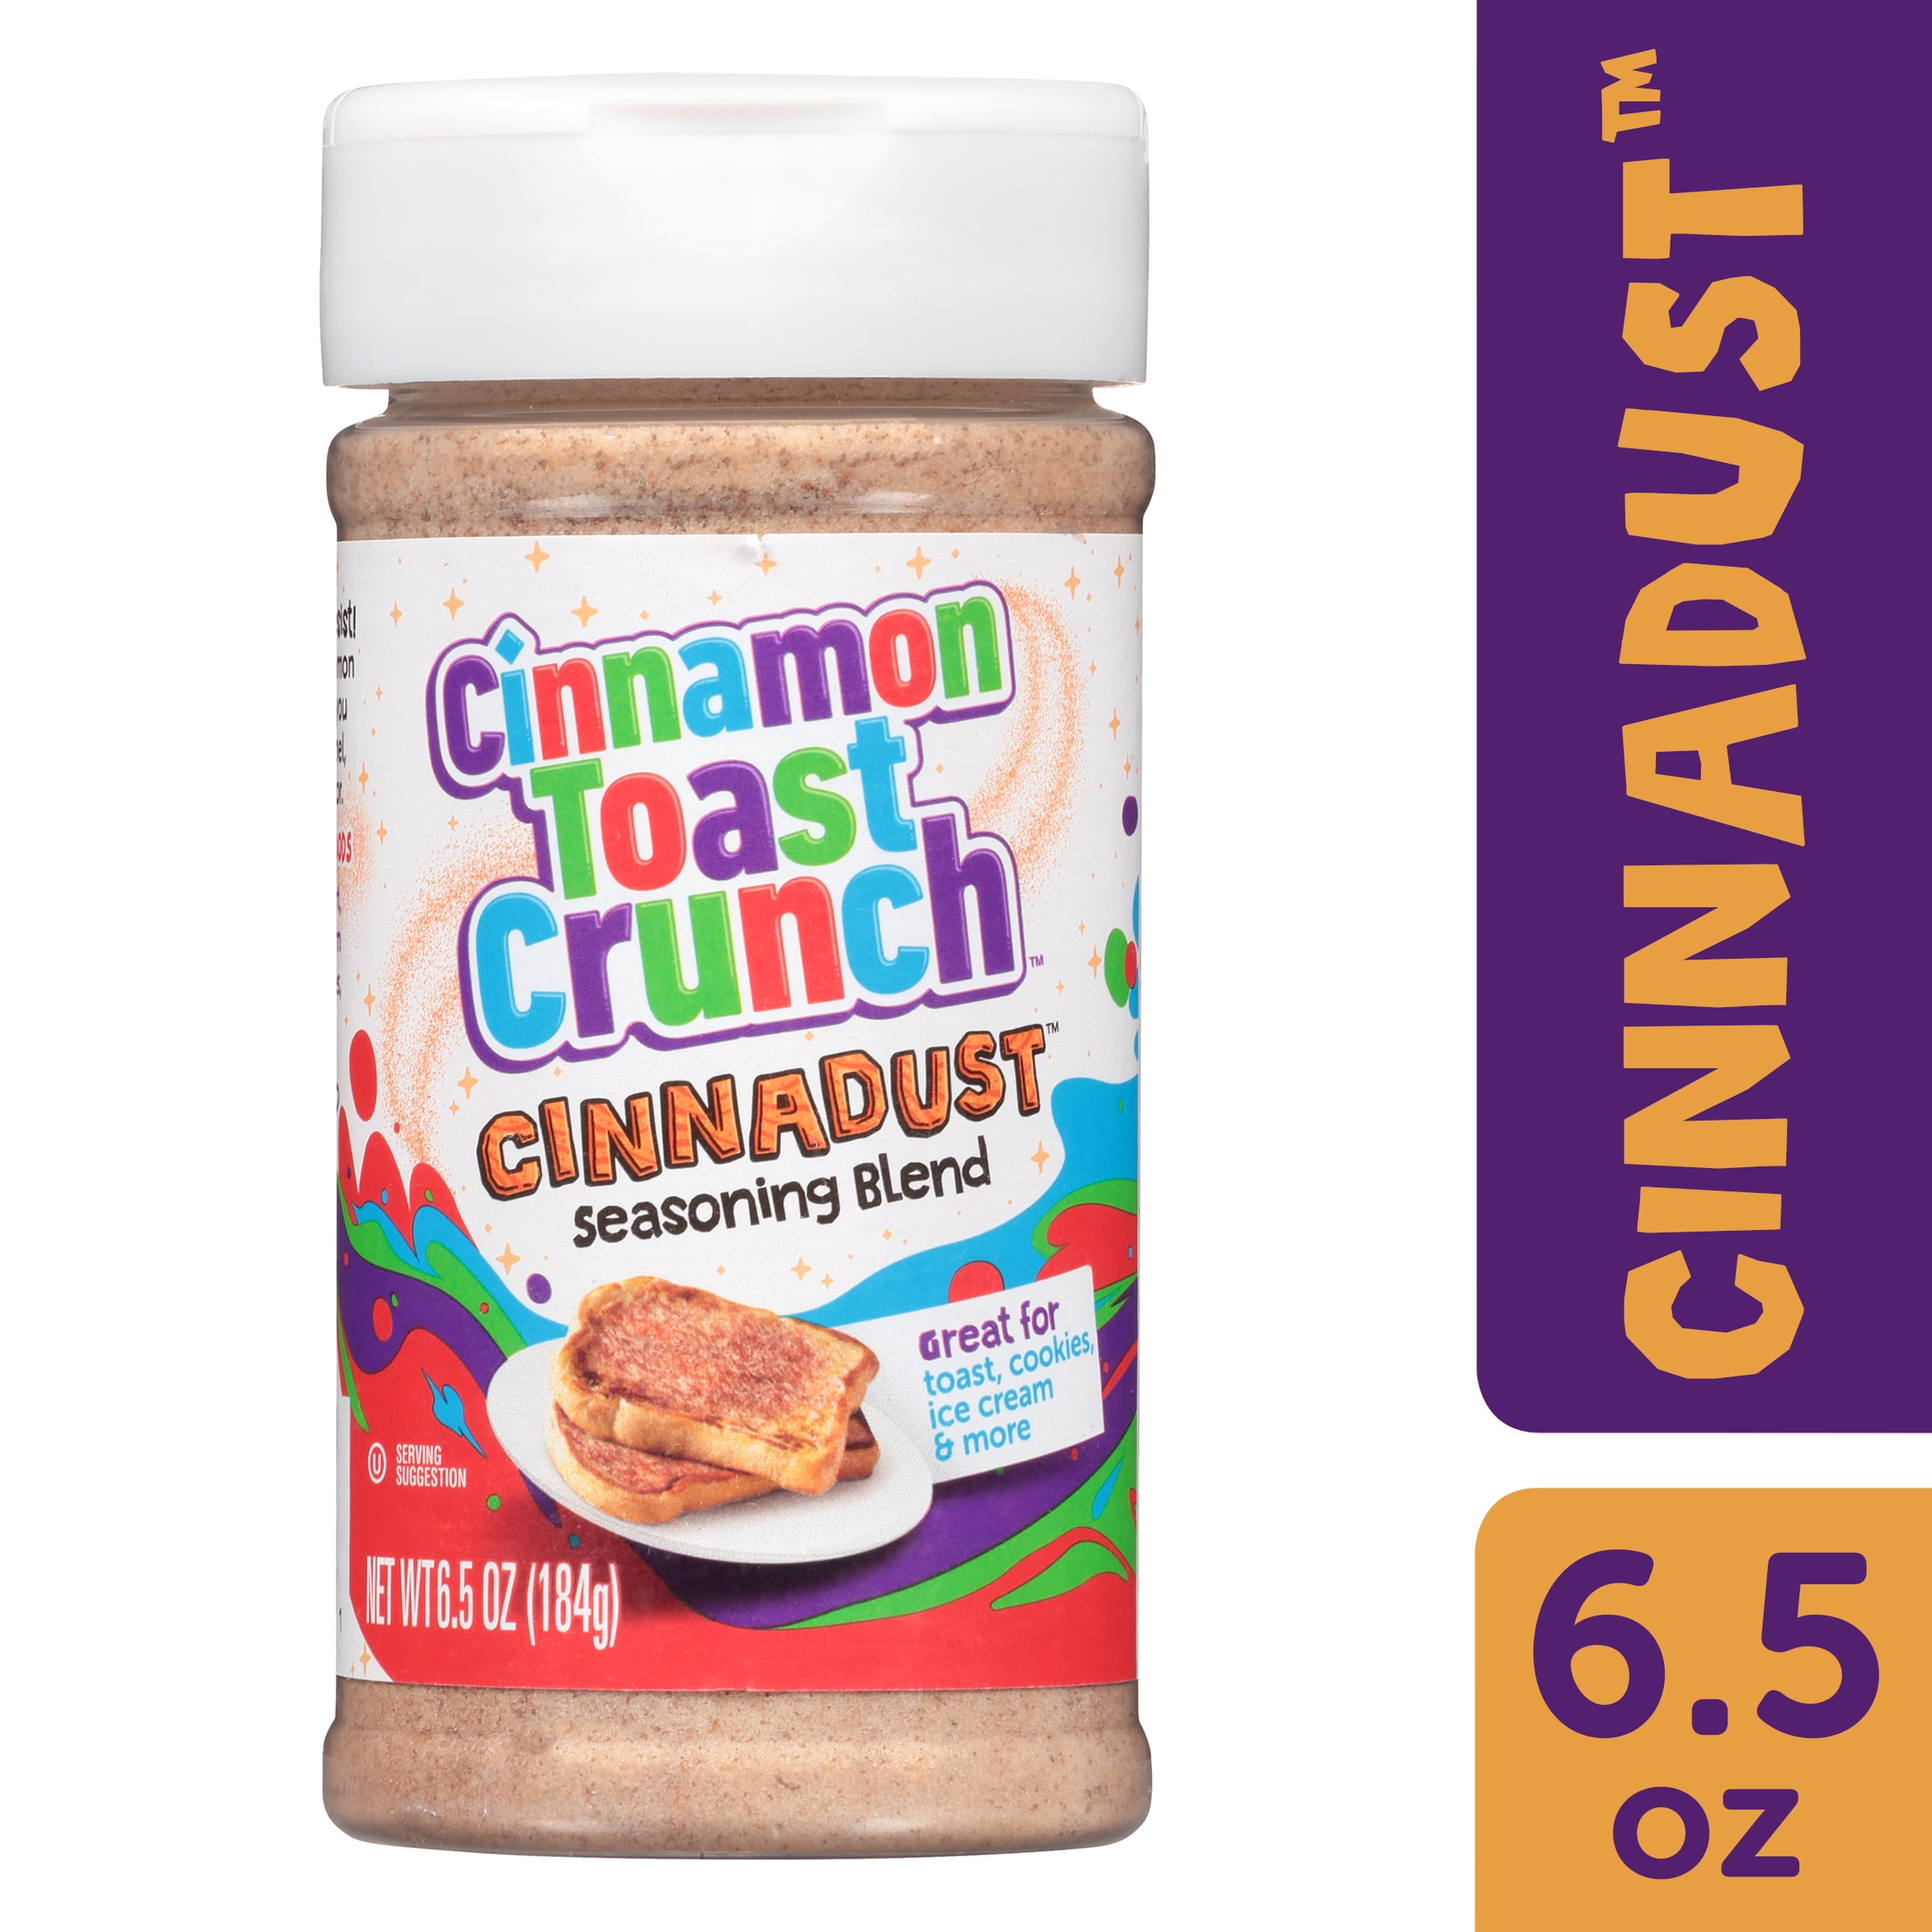 Cinnamon Toast Crunch launches seasoning blend